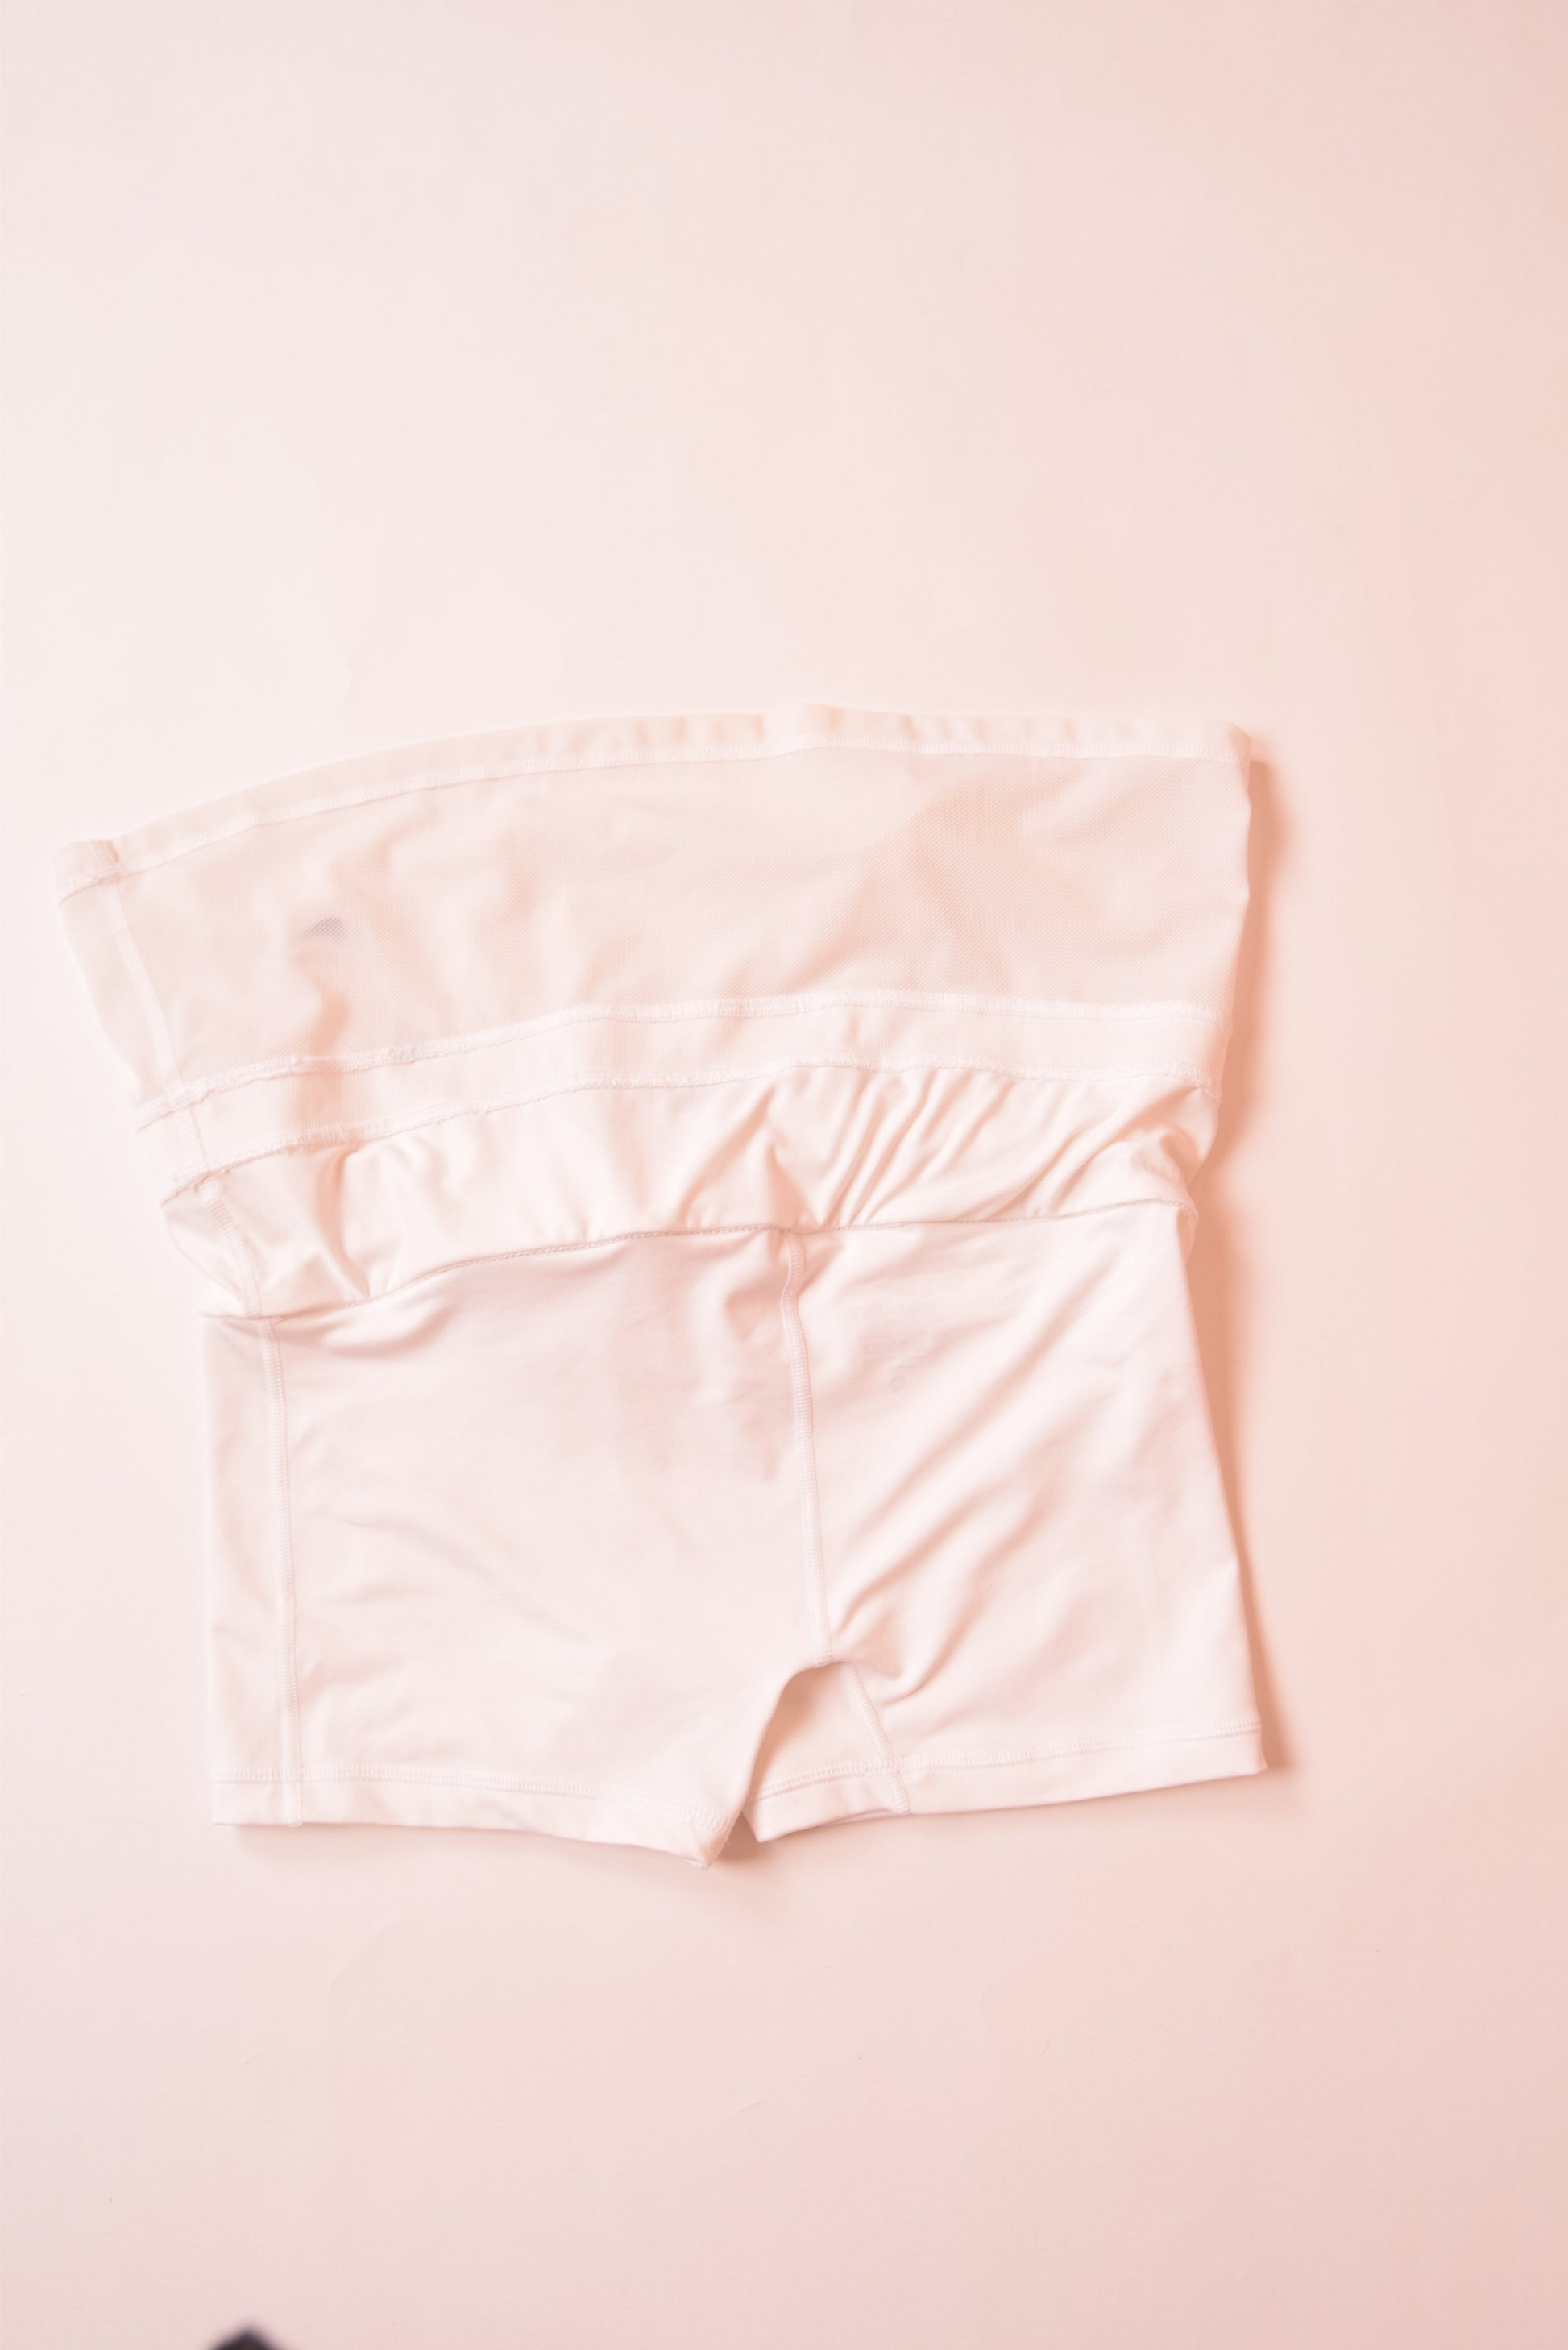 Nike tennis skirt white dri fit size m